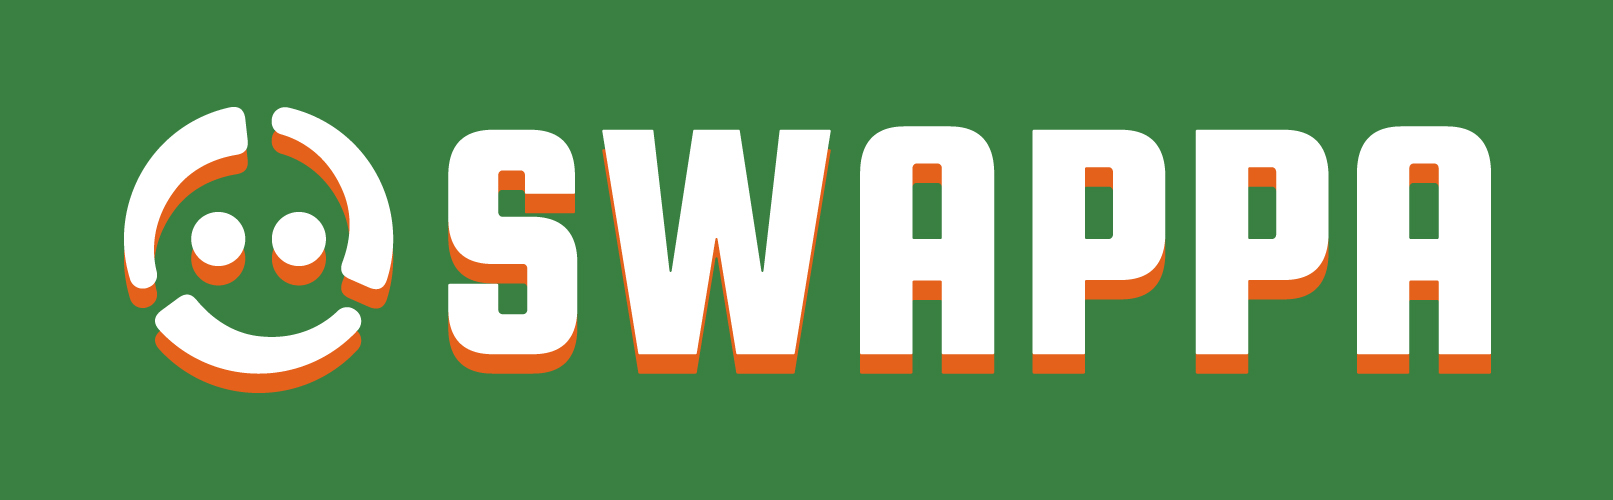 Swappa logo 2021